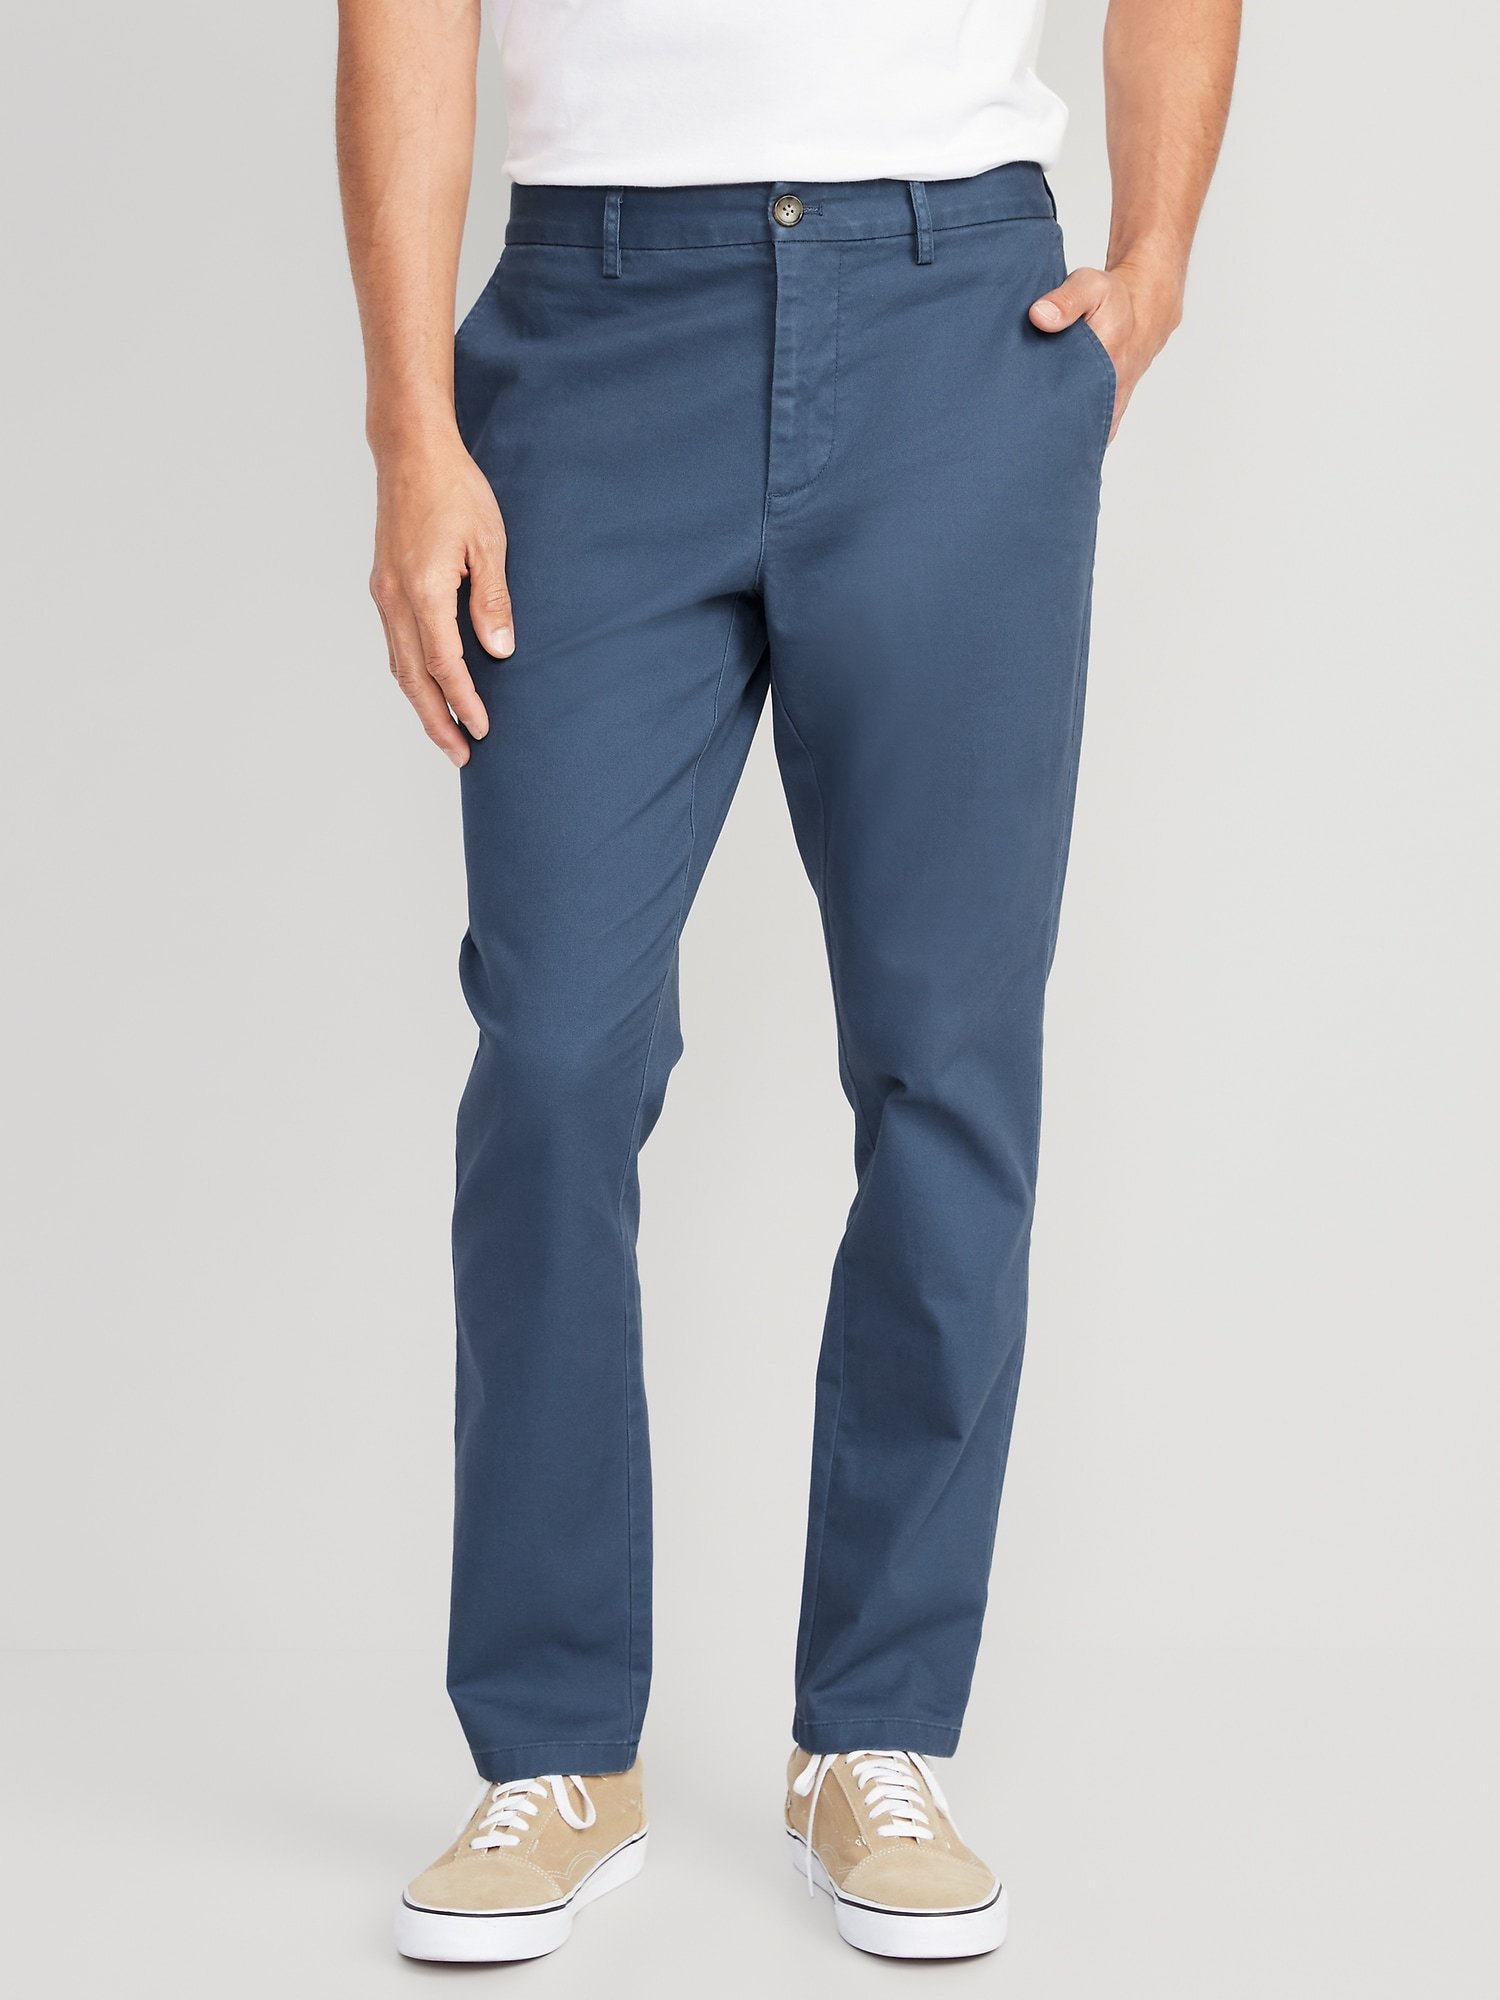 Slim Built-In Flex Rotation Chino Pants for Men P2,450.jpeg